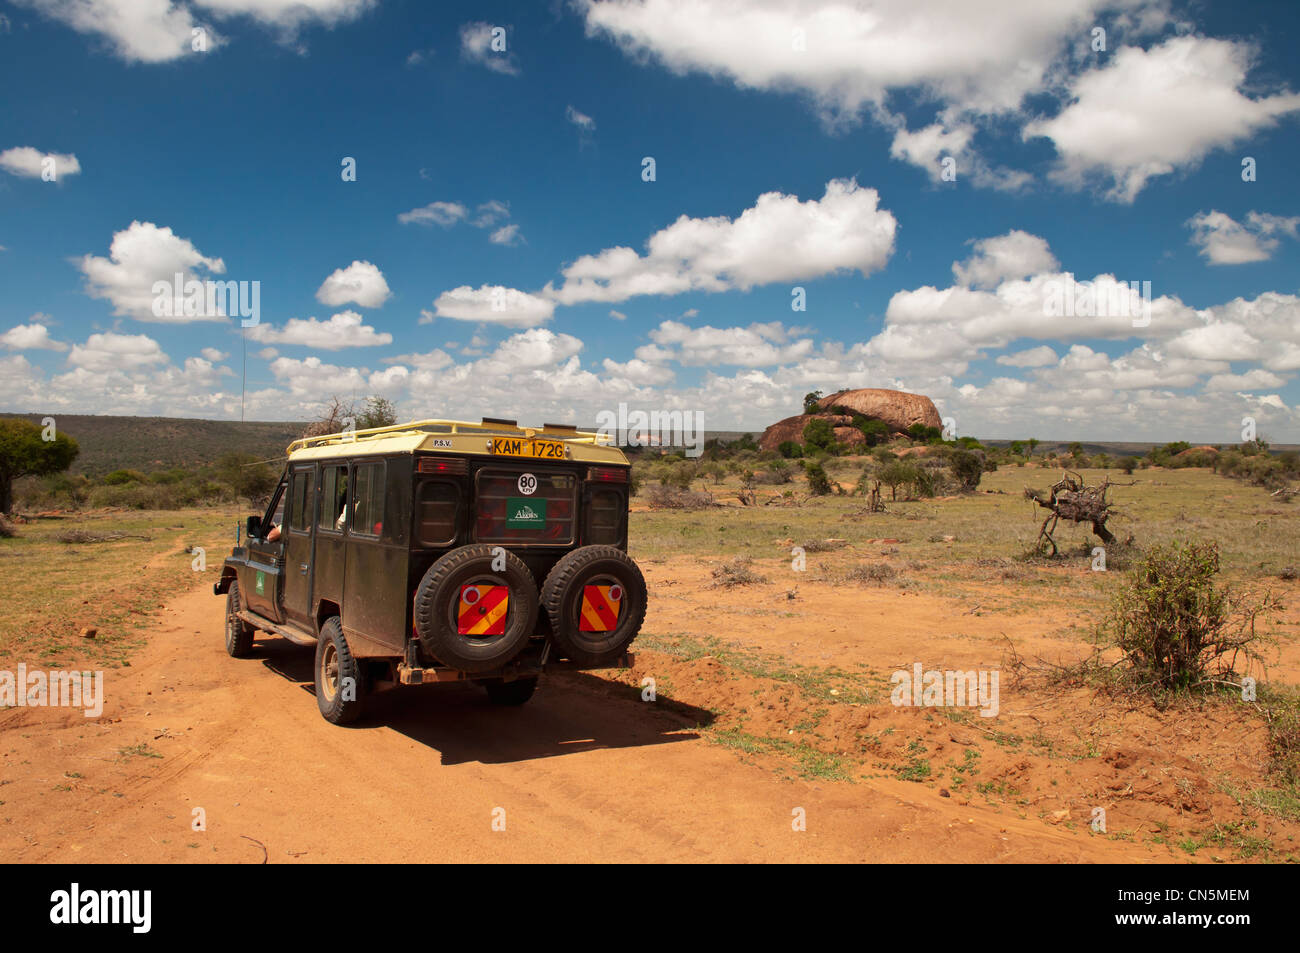 Kenya, Laikipia, off-road vehicle Stock Photo